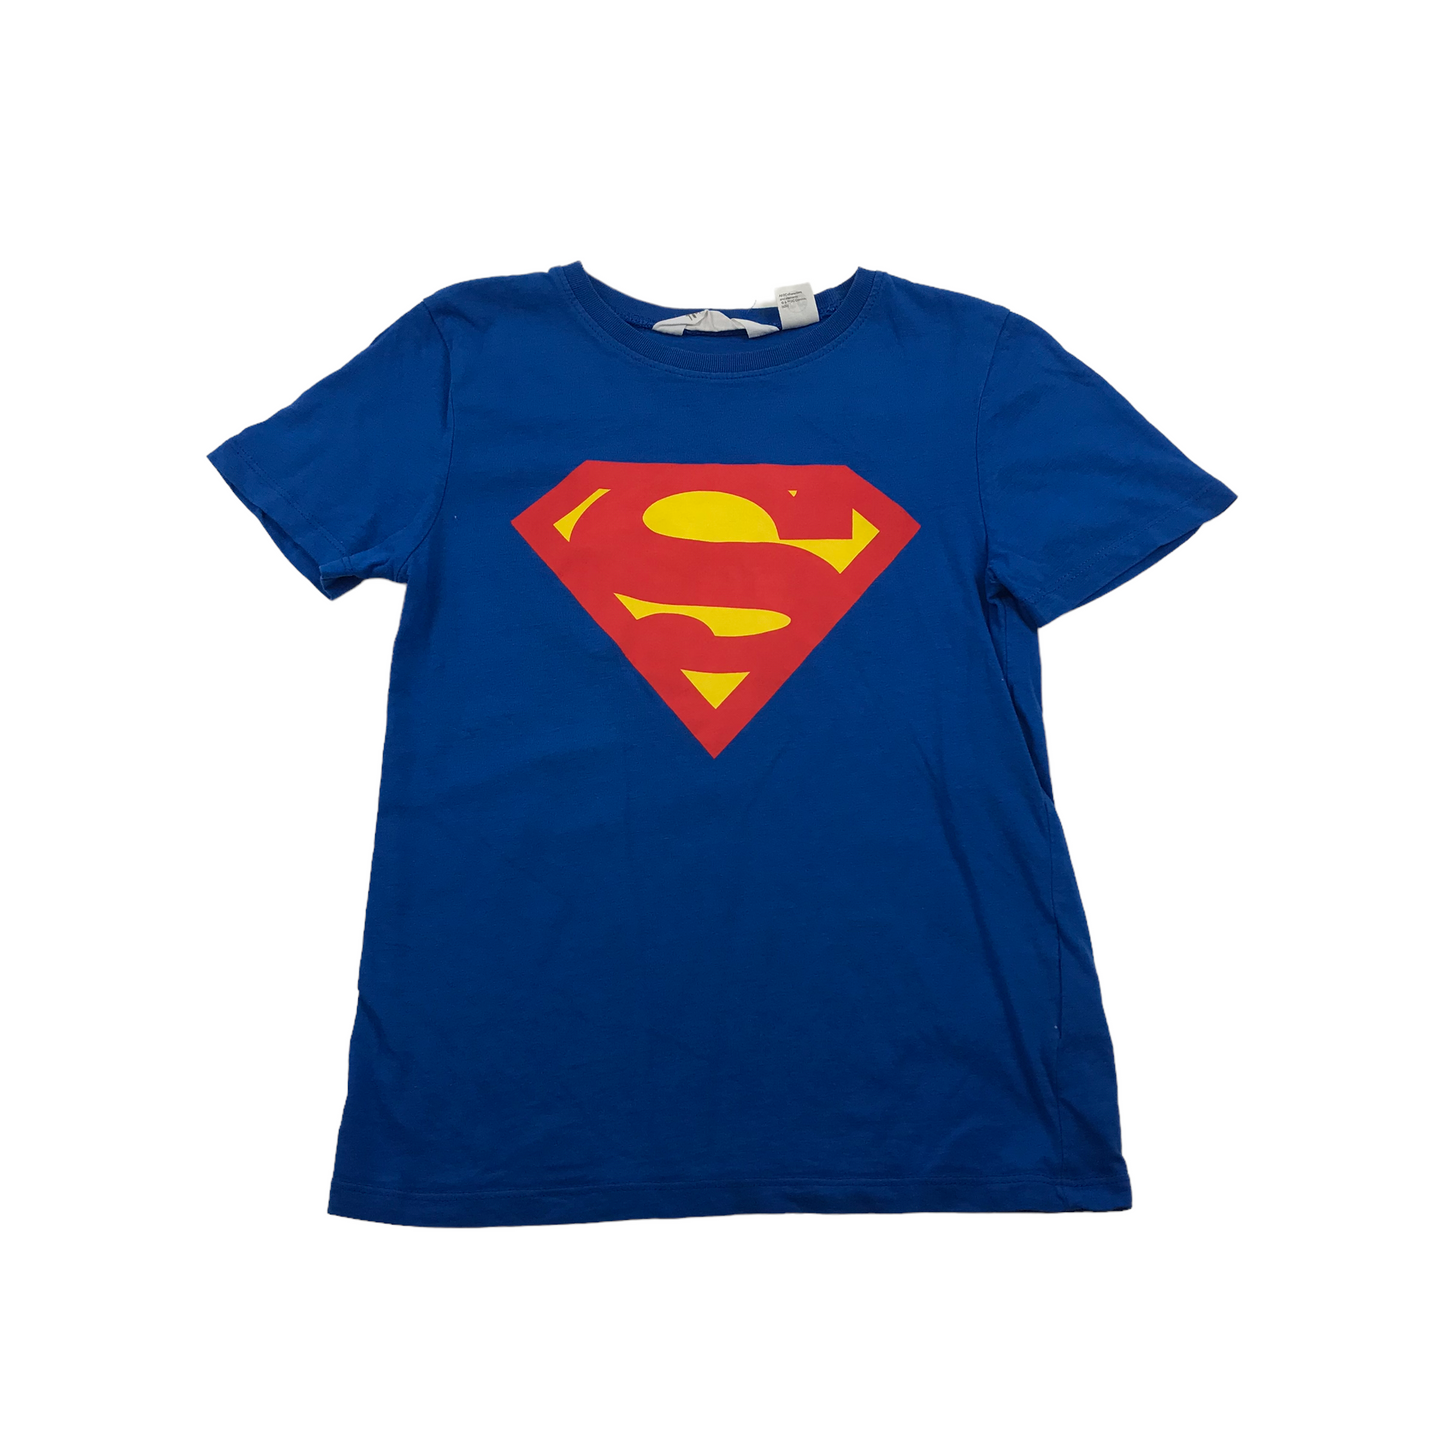 H&M Royal Blue Superman T-shirt Age 7